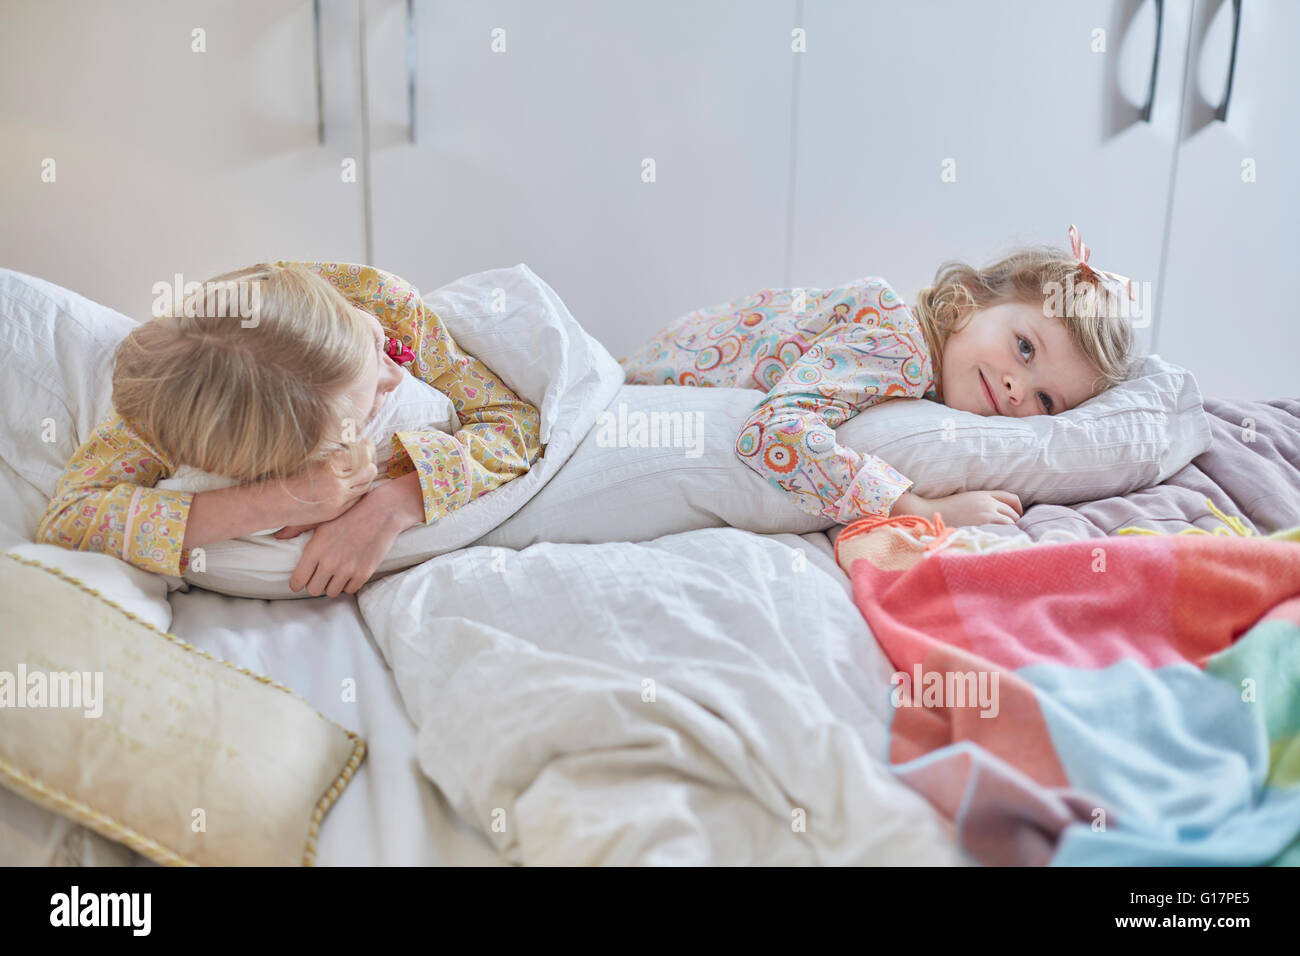 Girls in pyjamas day-dreaming in bed Stock Photo